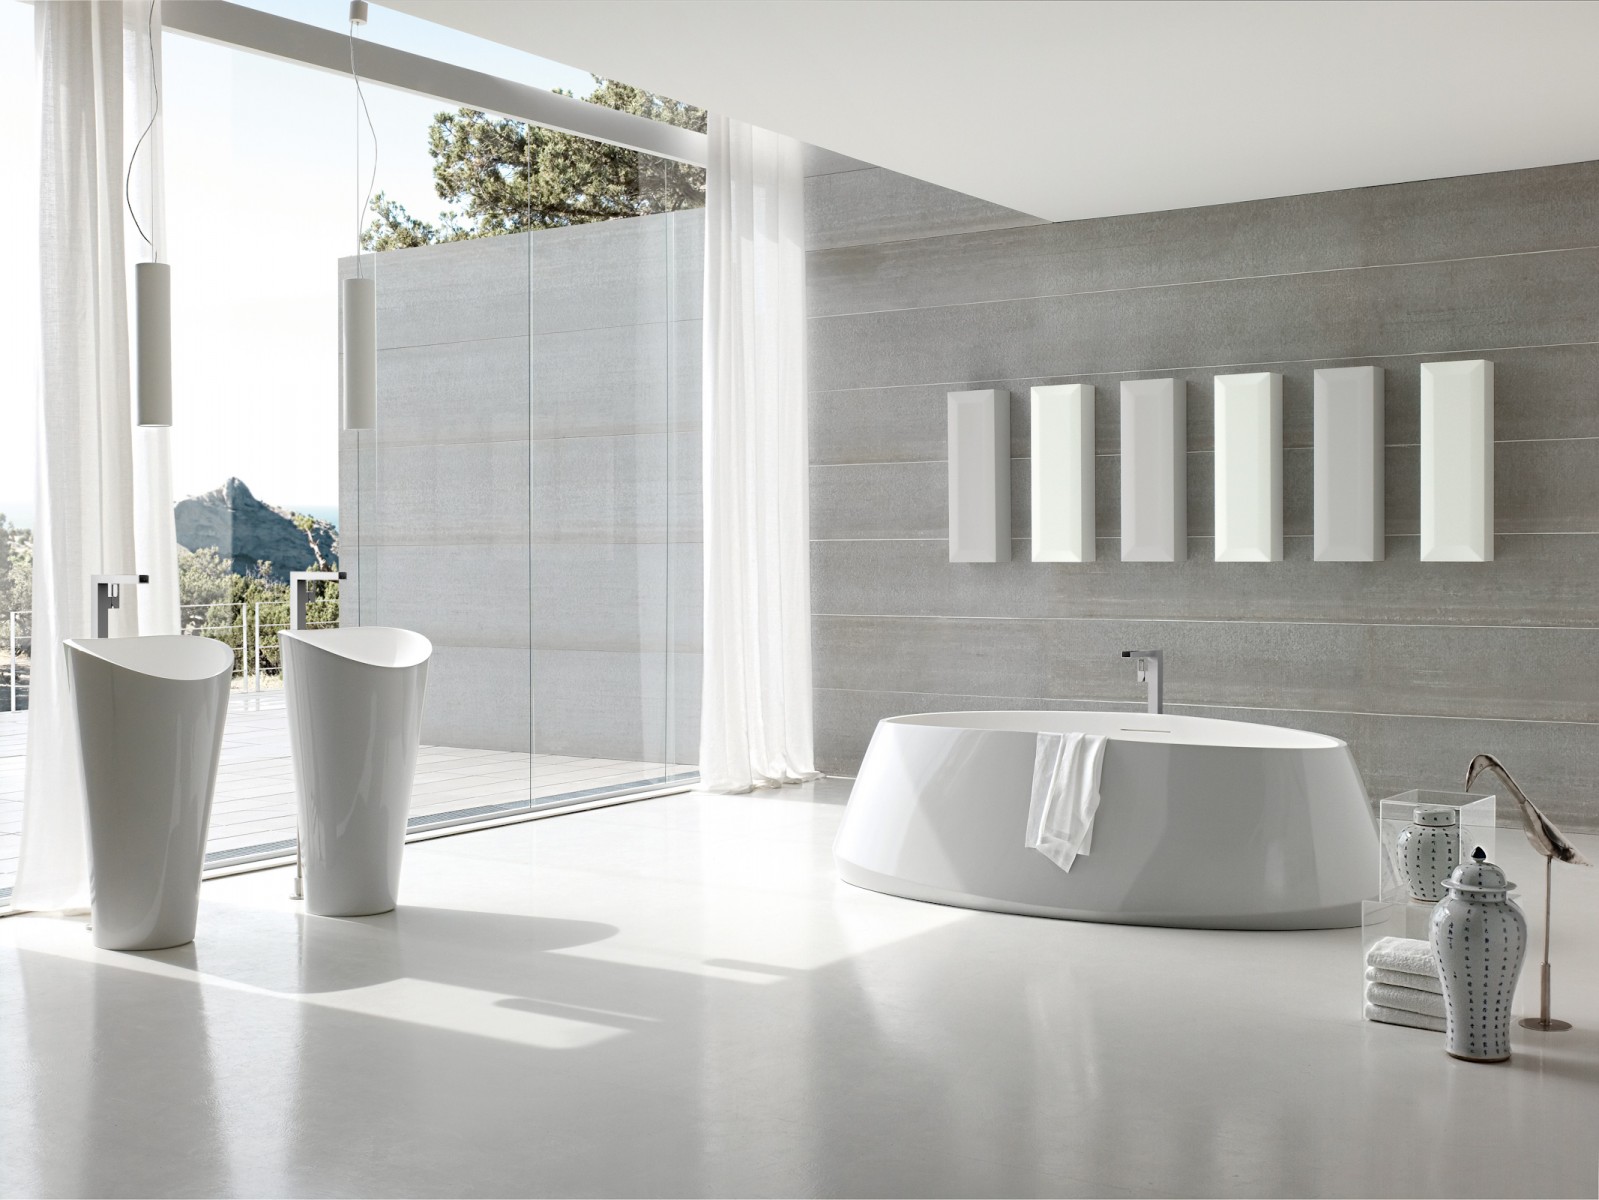 white modern bathroom "width =" 1599 "height =" 1200 "srcset =" https://mileray.com/wp-content/uploads/2020/05/1588515282_706_Inspiration-To-Decor-Modern-Bathroom-Design-Ideas-Bring-a-Beauty.jpg 1599w, https://mileray.com/wp- content / uploads / 2016/09 / Toscoquattro1-300x225.jpg 300w, https://mileray.com/wp-content/uploads/2016/09/Toscoquattro1-768x576.jpg 768w, https://mileray.com/wp- content / uploads / 2016/09 / Toscoquattro1-1024x768.jpg 1024w, https://mileray.com/wp-content/uploads/2016/09/Toscoquattro1-80x60.jpg 80w, https://mileray.com/wp- content / uploads / 2016/09 / Toscoquattro1-265x198.jpg 265w, https://mileray.com/wp-content/uploads/2016/09/Toscoquattro1-696x522.jpg 696w, https://mileray.com/wp- content / uploads / 2016/09 / Toscoquattro1-1068x802.jpg 1068w, https://mileray.com/wp-content/uploads/2016/09/Toscoquattro1-560x420.jpg 560w "sizes =" (maximum width: 1599px) 100vw , 1599px